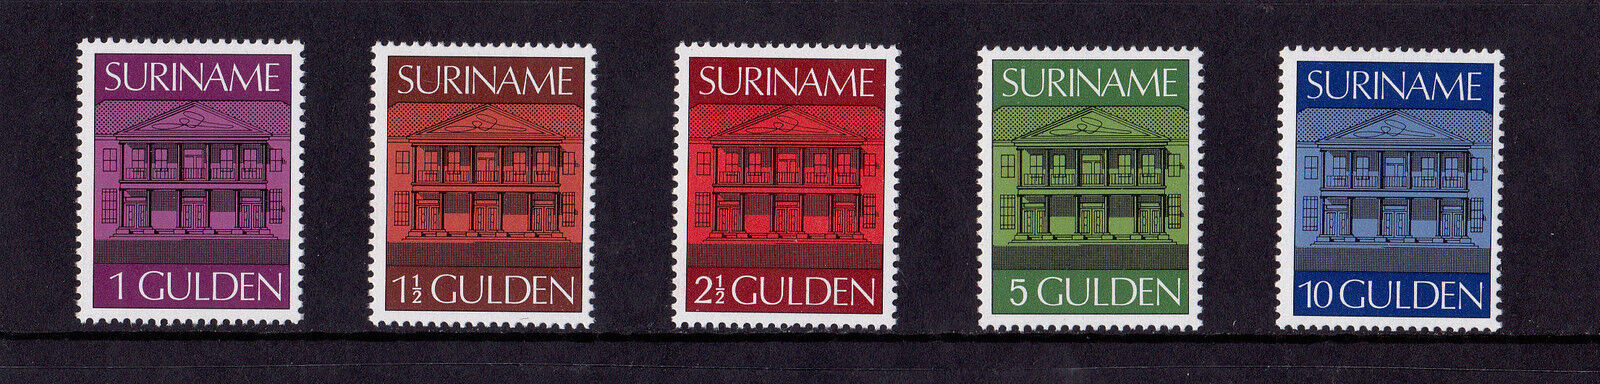 Surinam - 1975 Central Bank Definitives - U/M - SG 805-8a